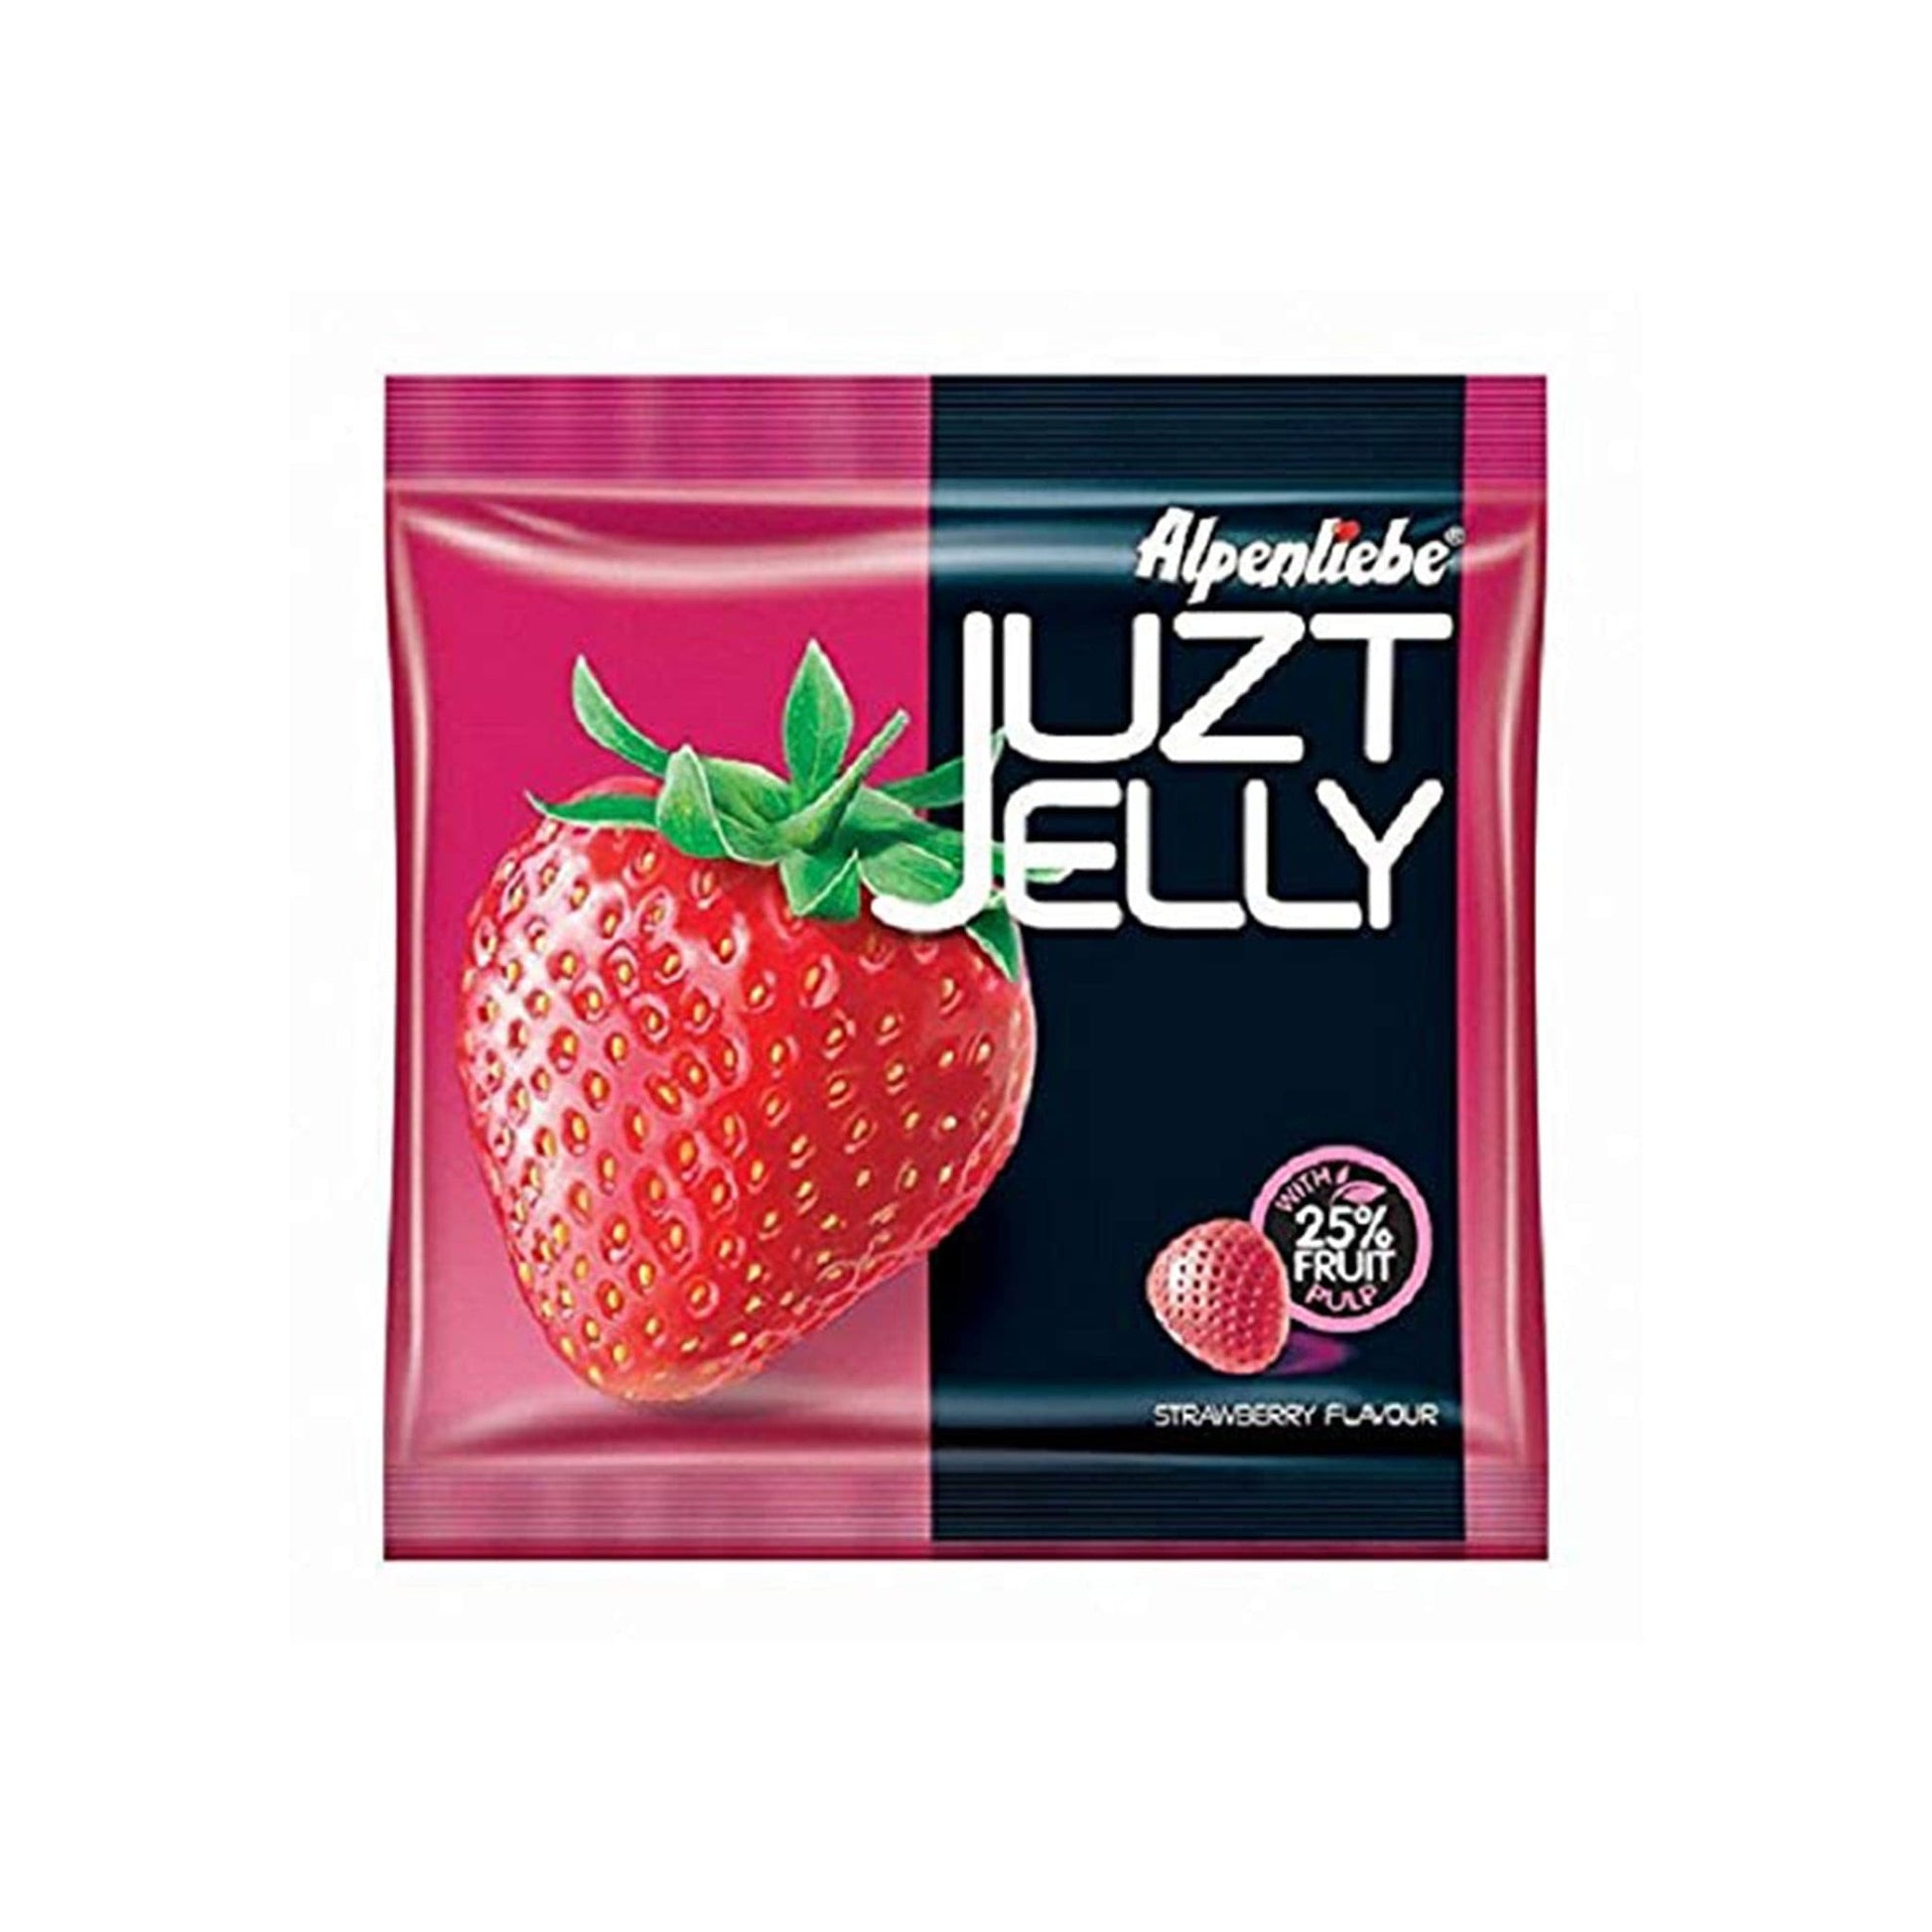 Alpenlibe Juzt Jelly-Strawberry Flavour.